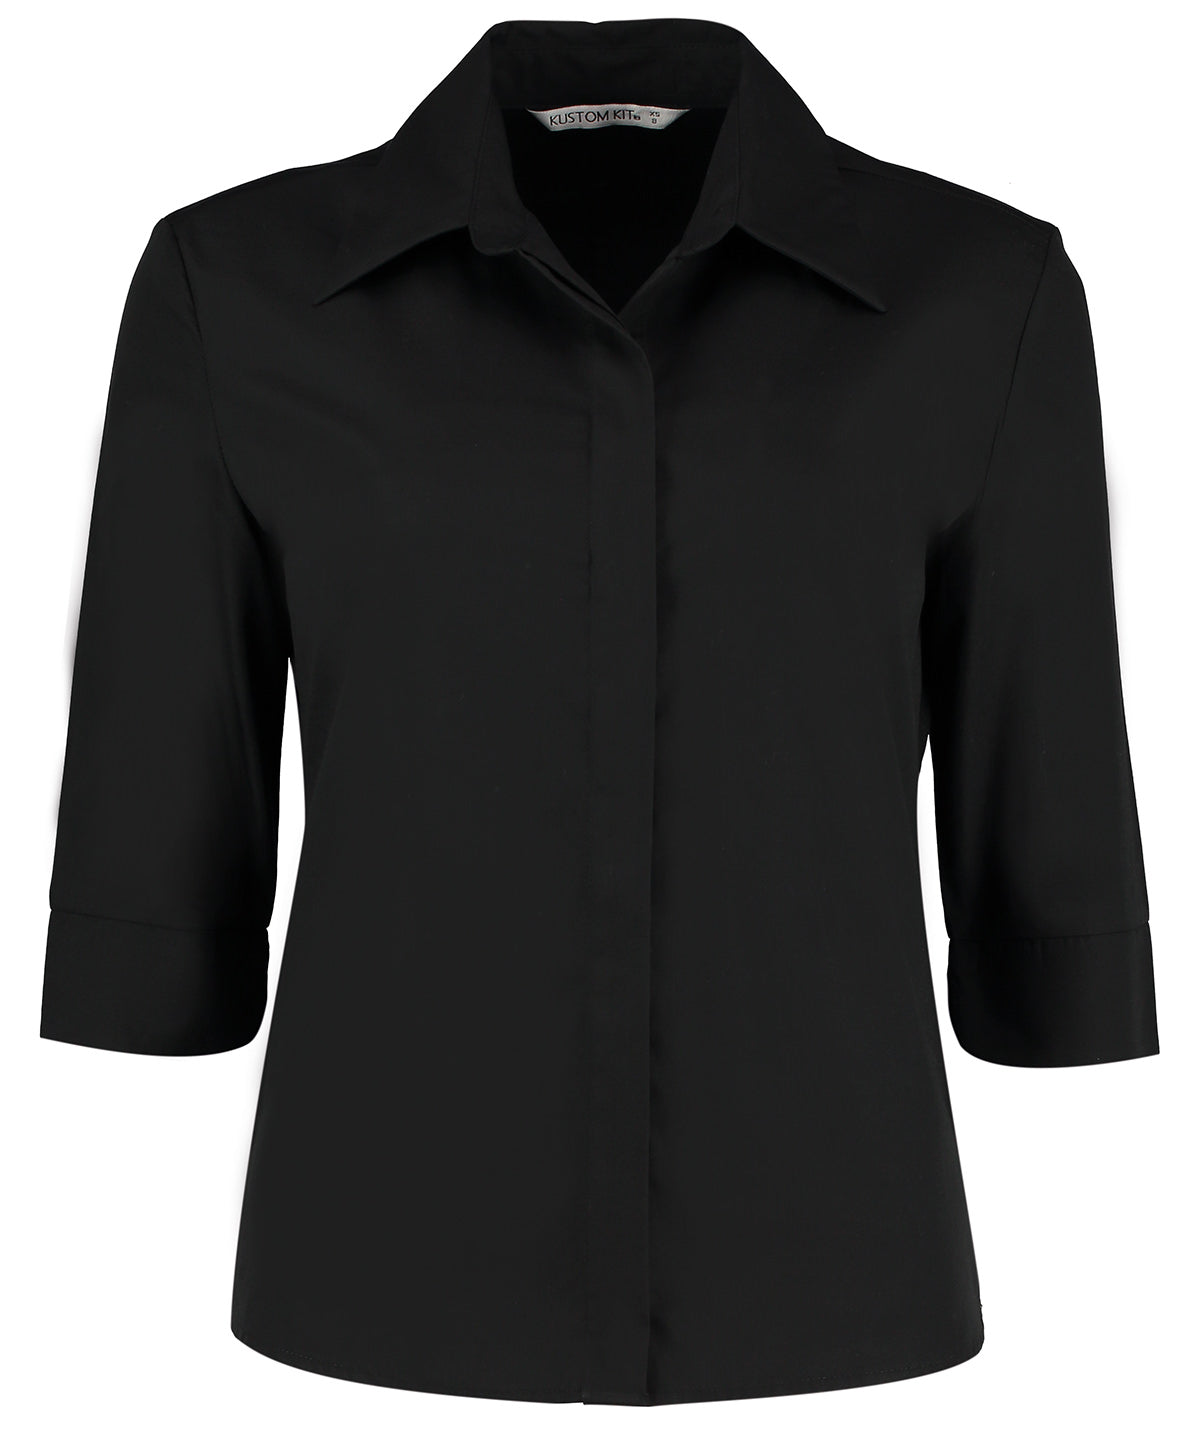 Kustom Kit Contiental ¾ sleeve blouse womens